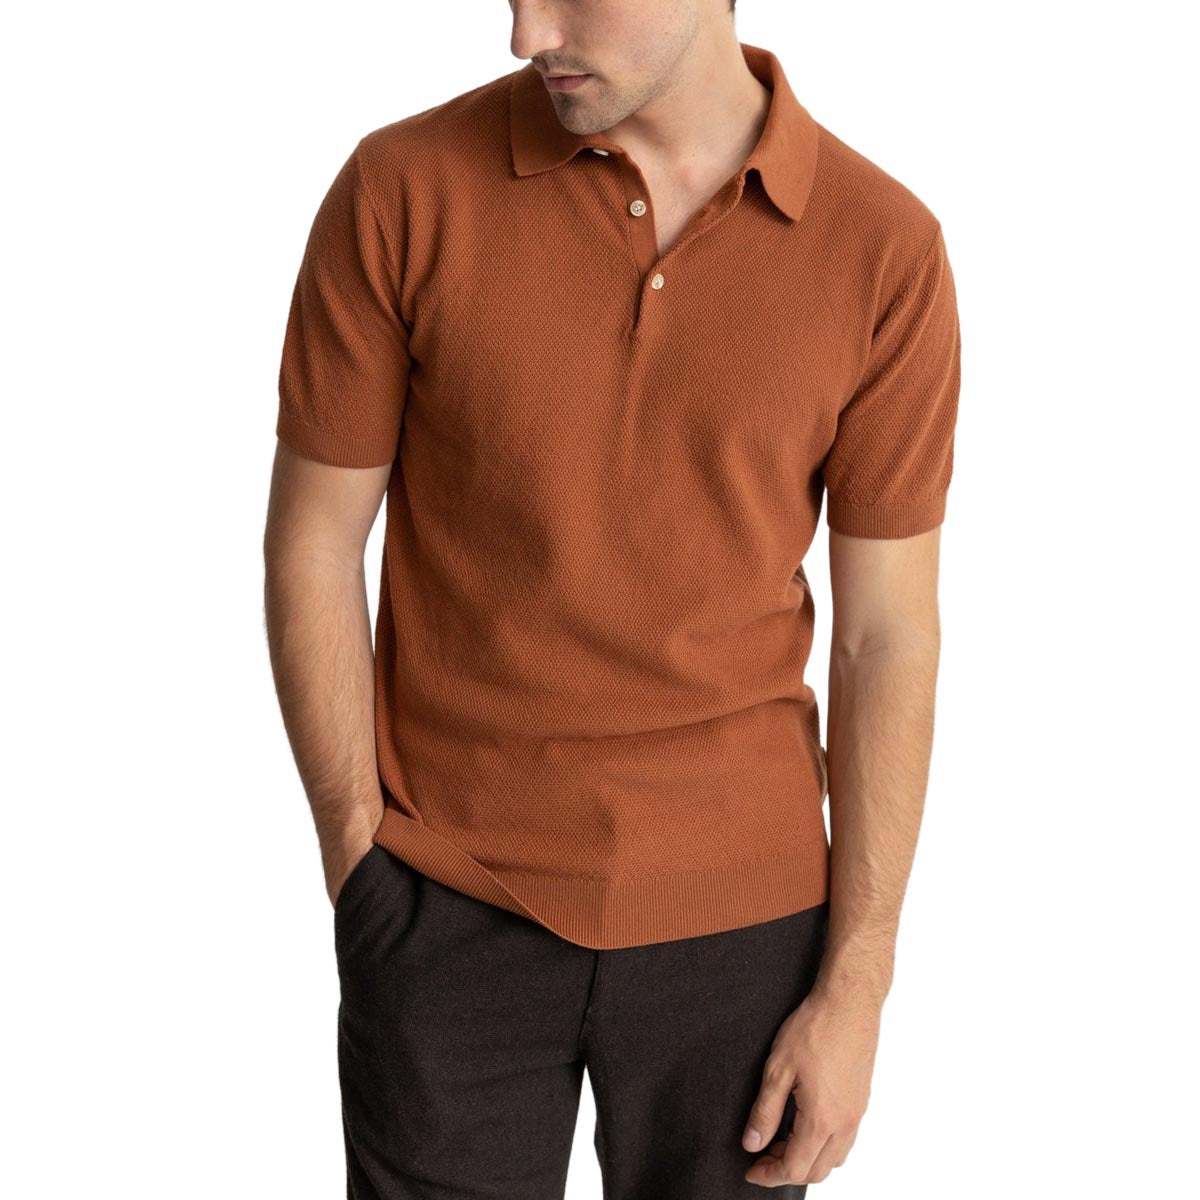 Rhythm Textured Knit Polo Shirt - Clay image 1